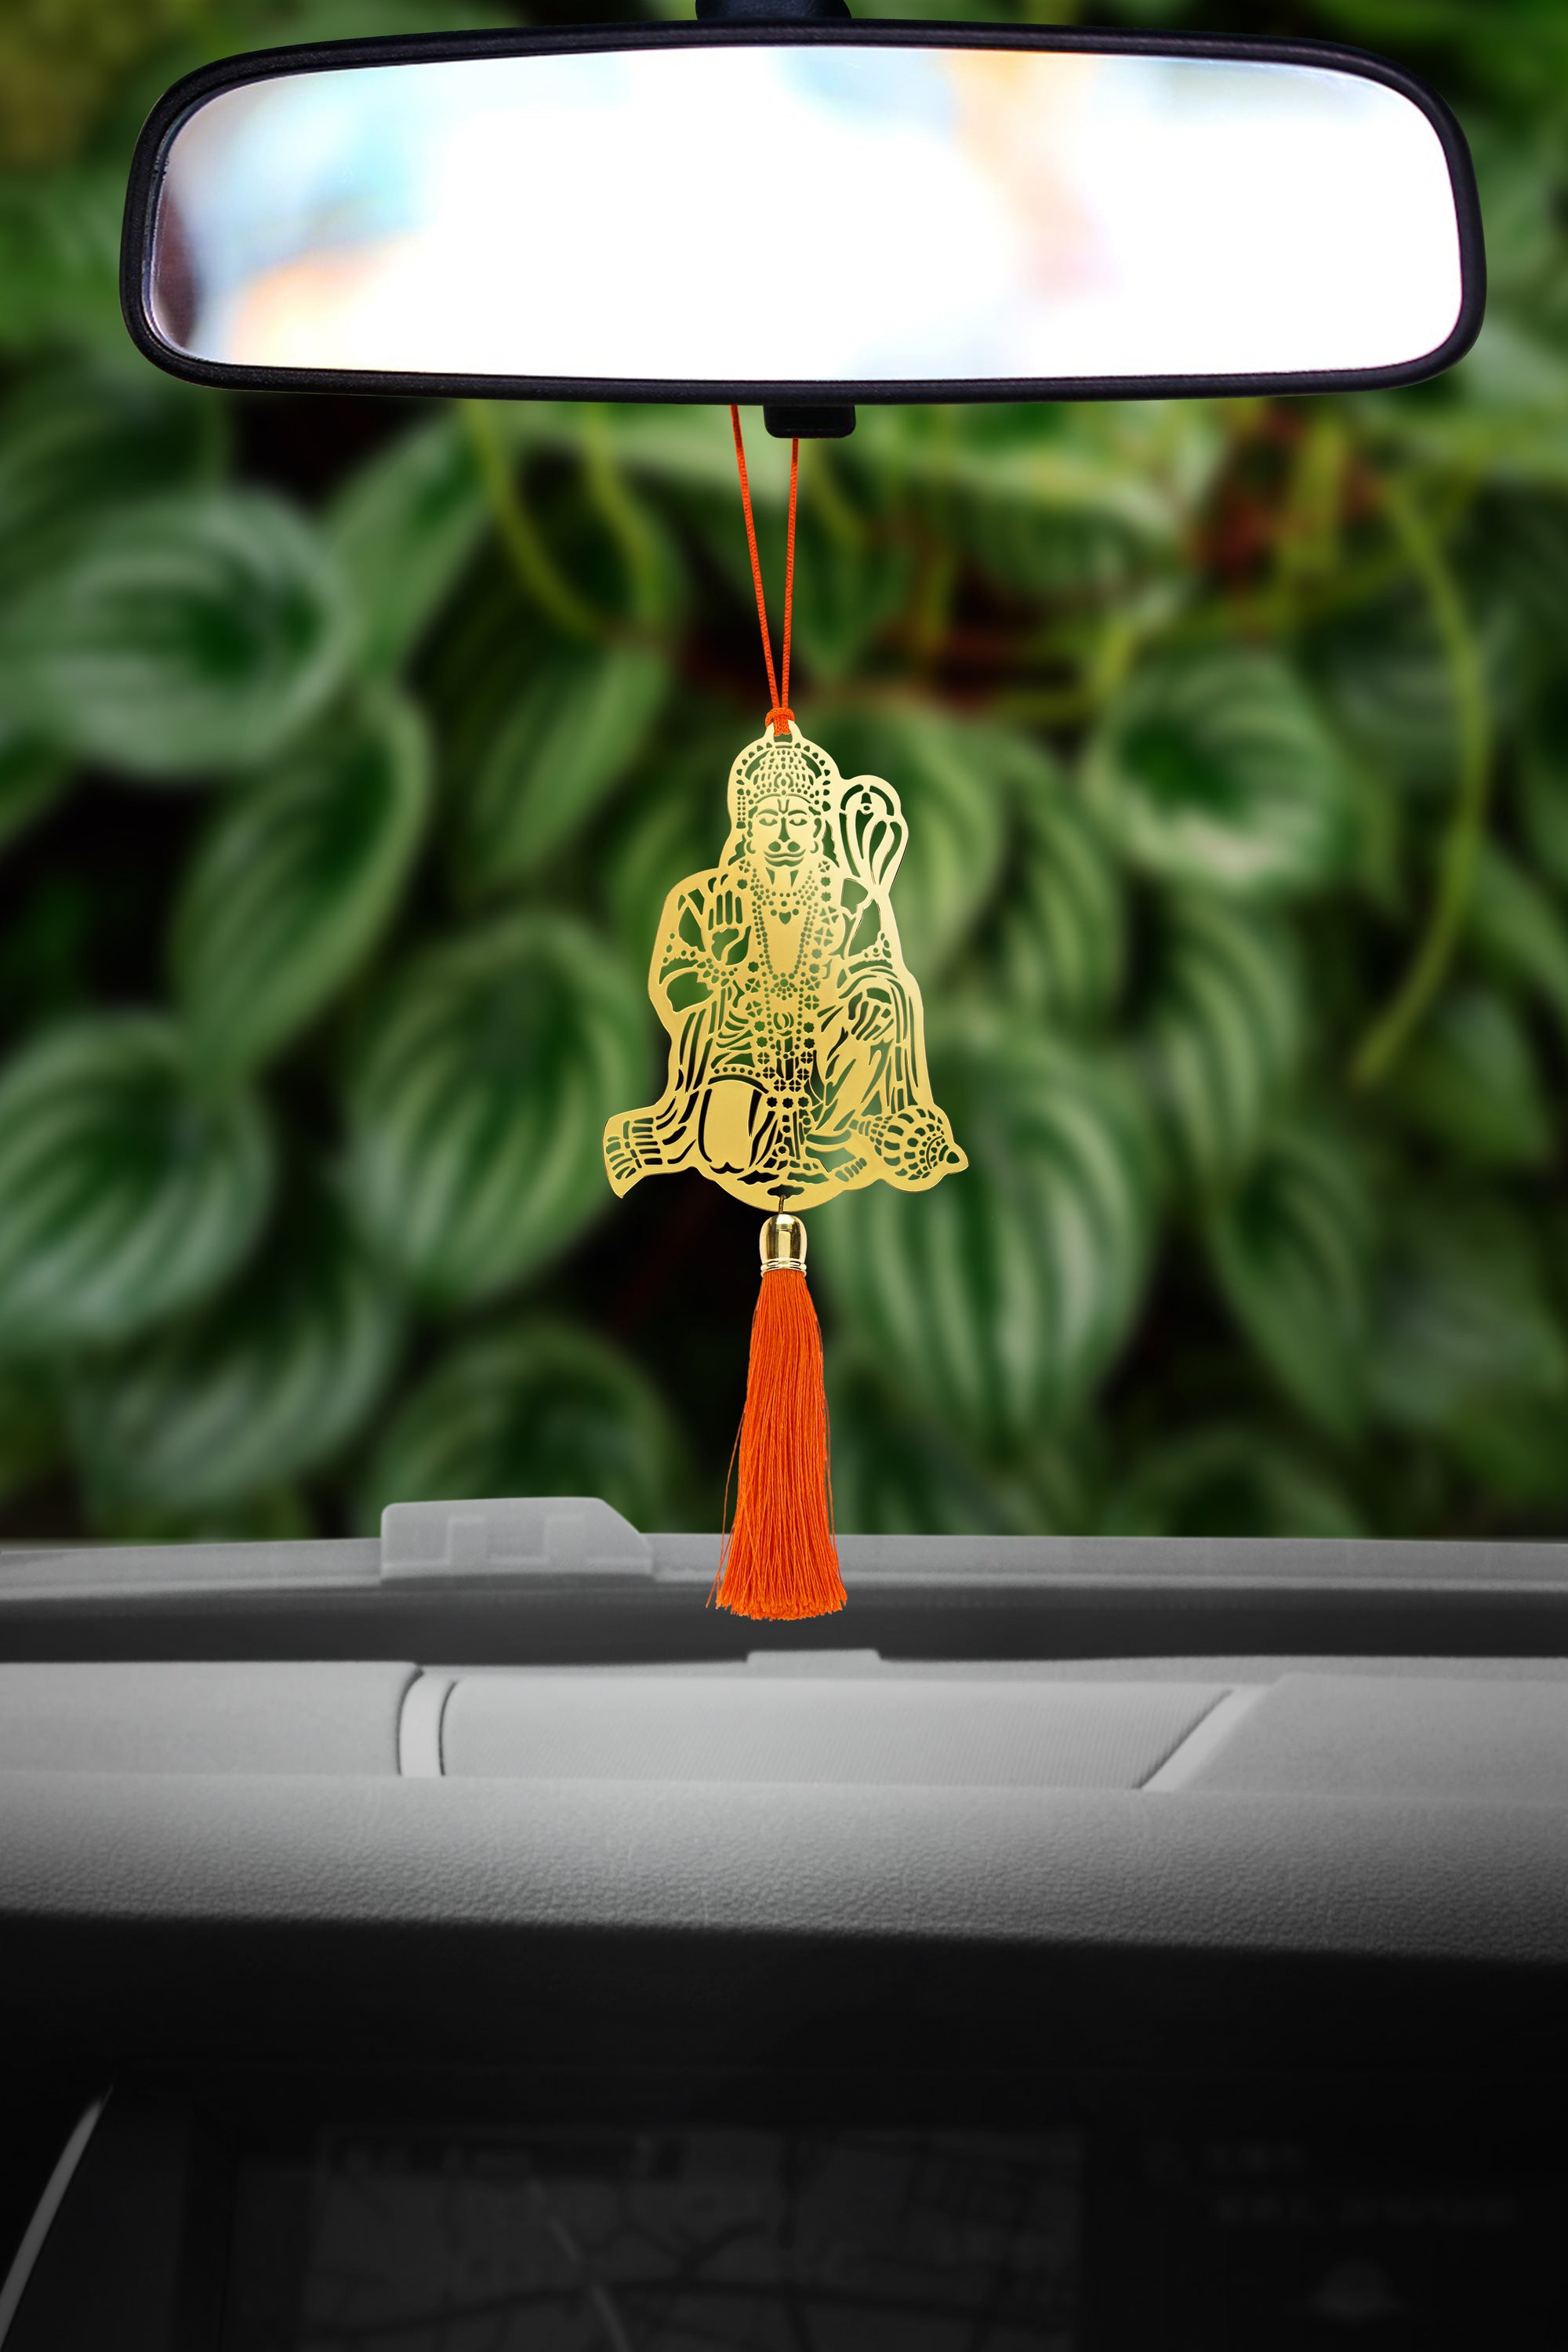 Jai Hanuman Bajrang Bali Hanging Accessories for Car rear view mirror Décor in Brass